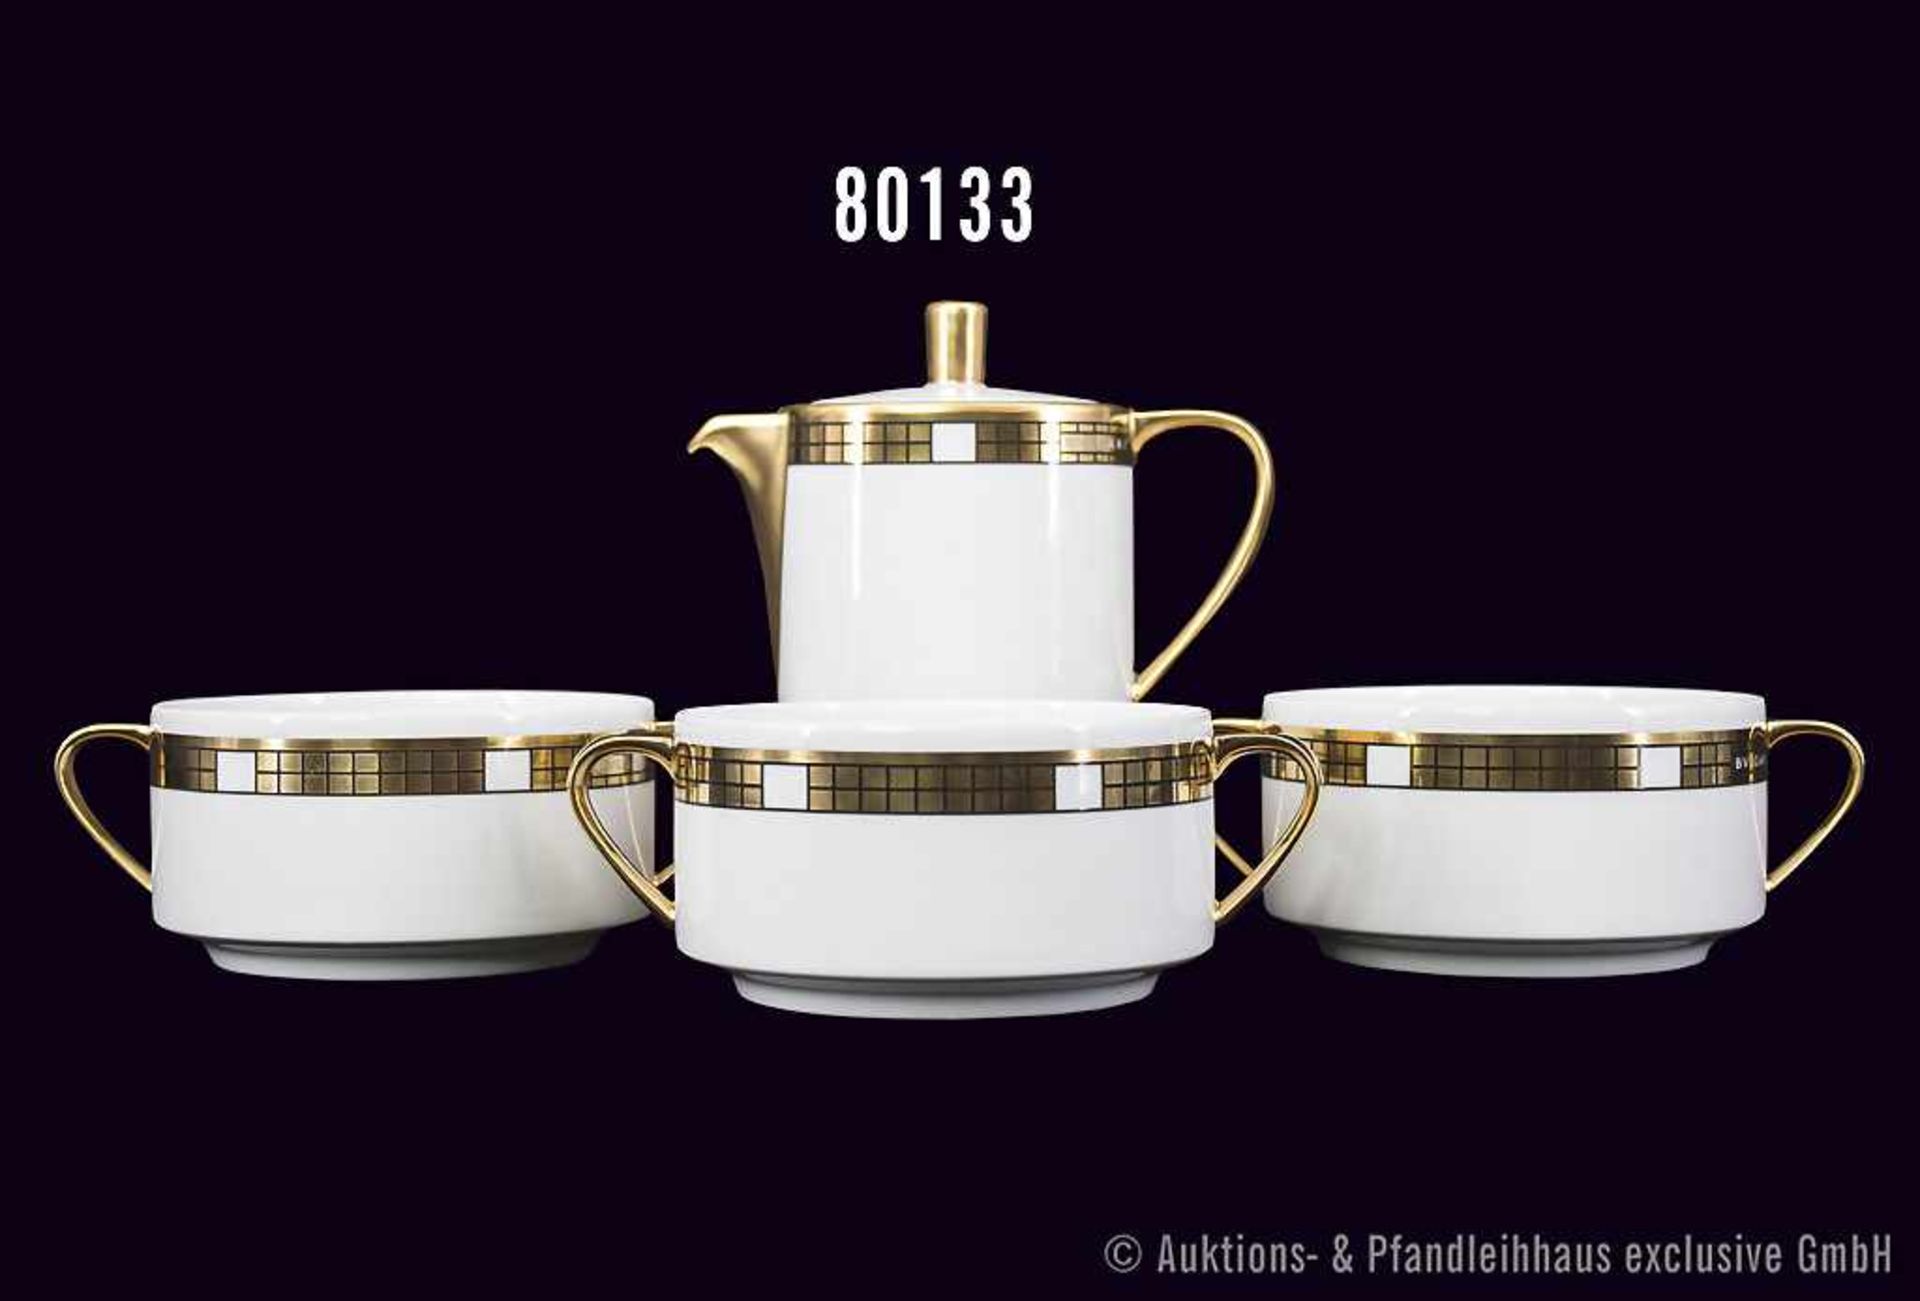 Konv. Rosenthal Porzellan, 7 Teile, Serie BULGARI, Dekor Quadri gold, dabei 3 Kaffeetassen, 3